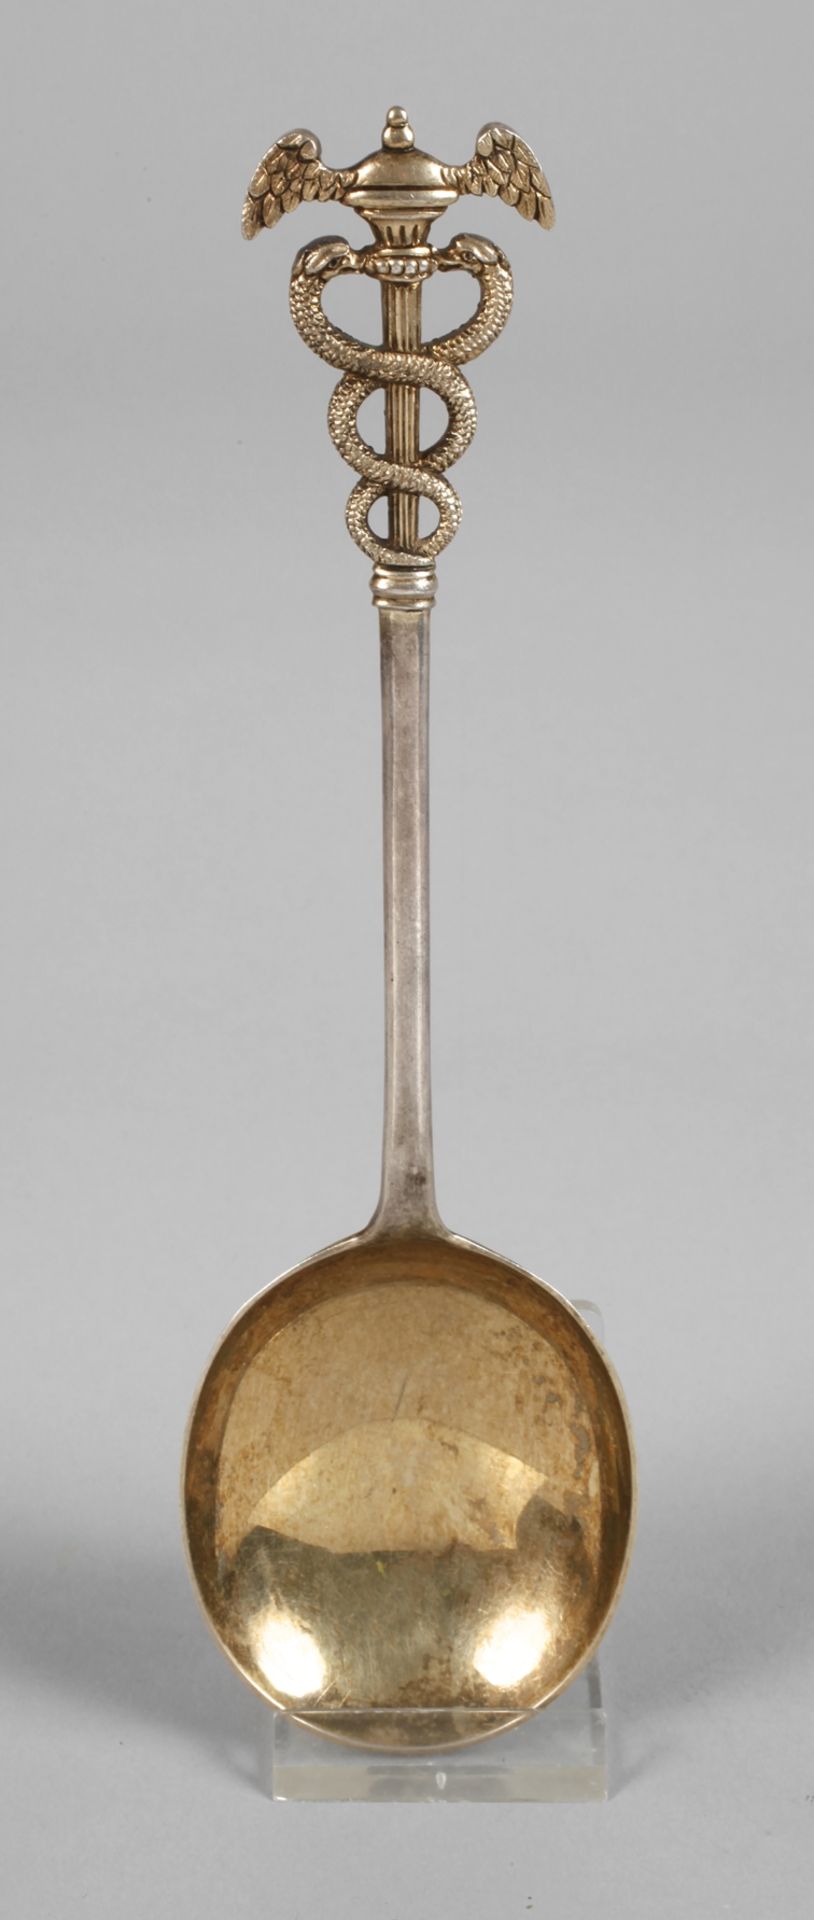 Spoon Aesculapius England